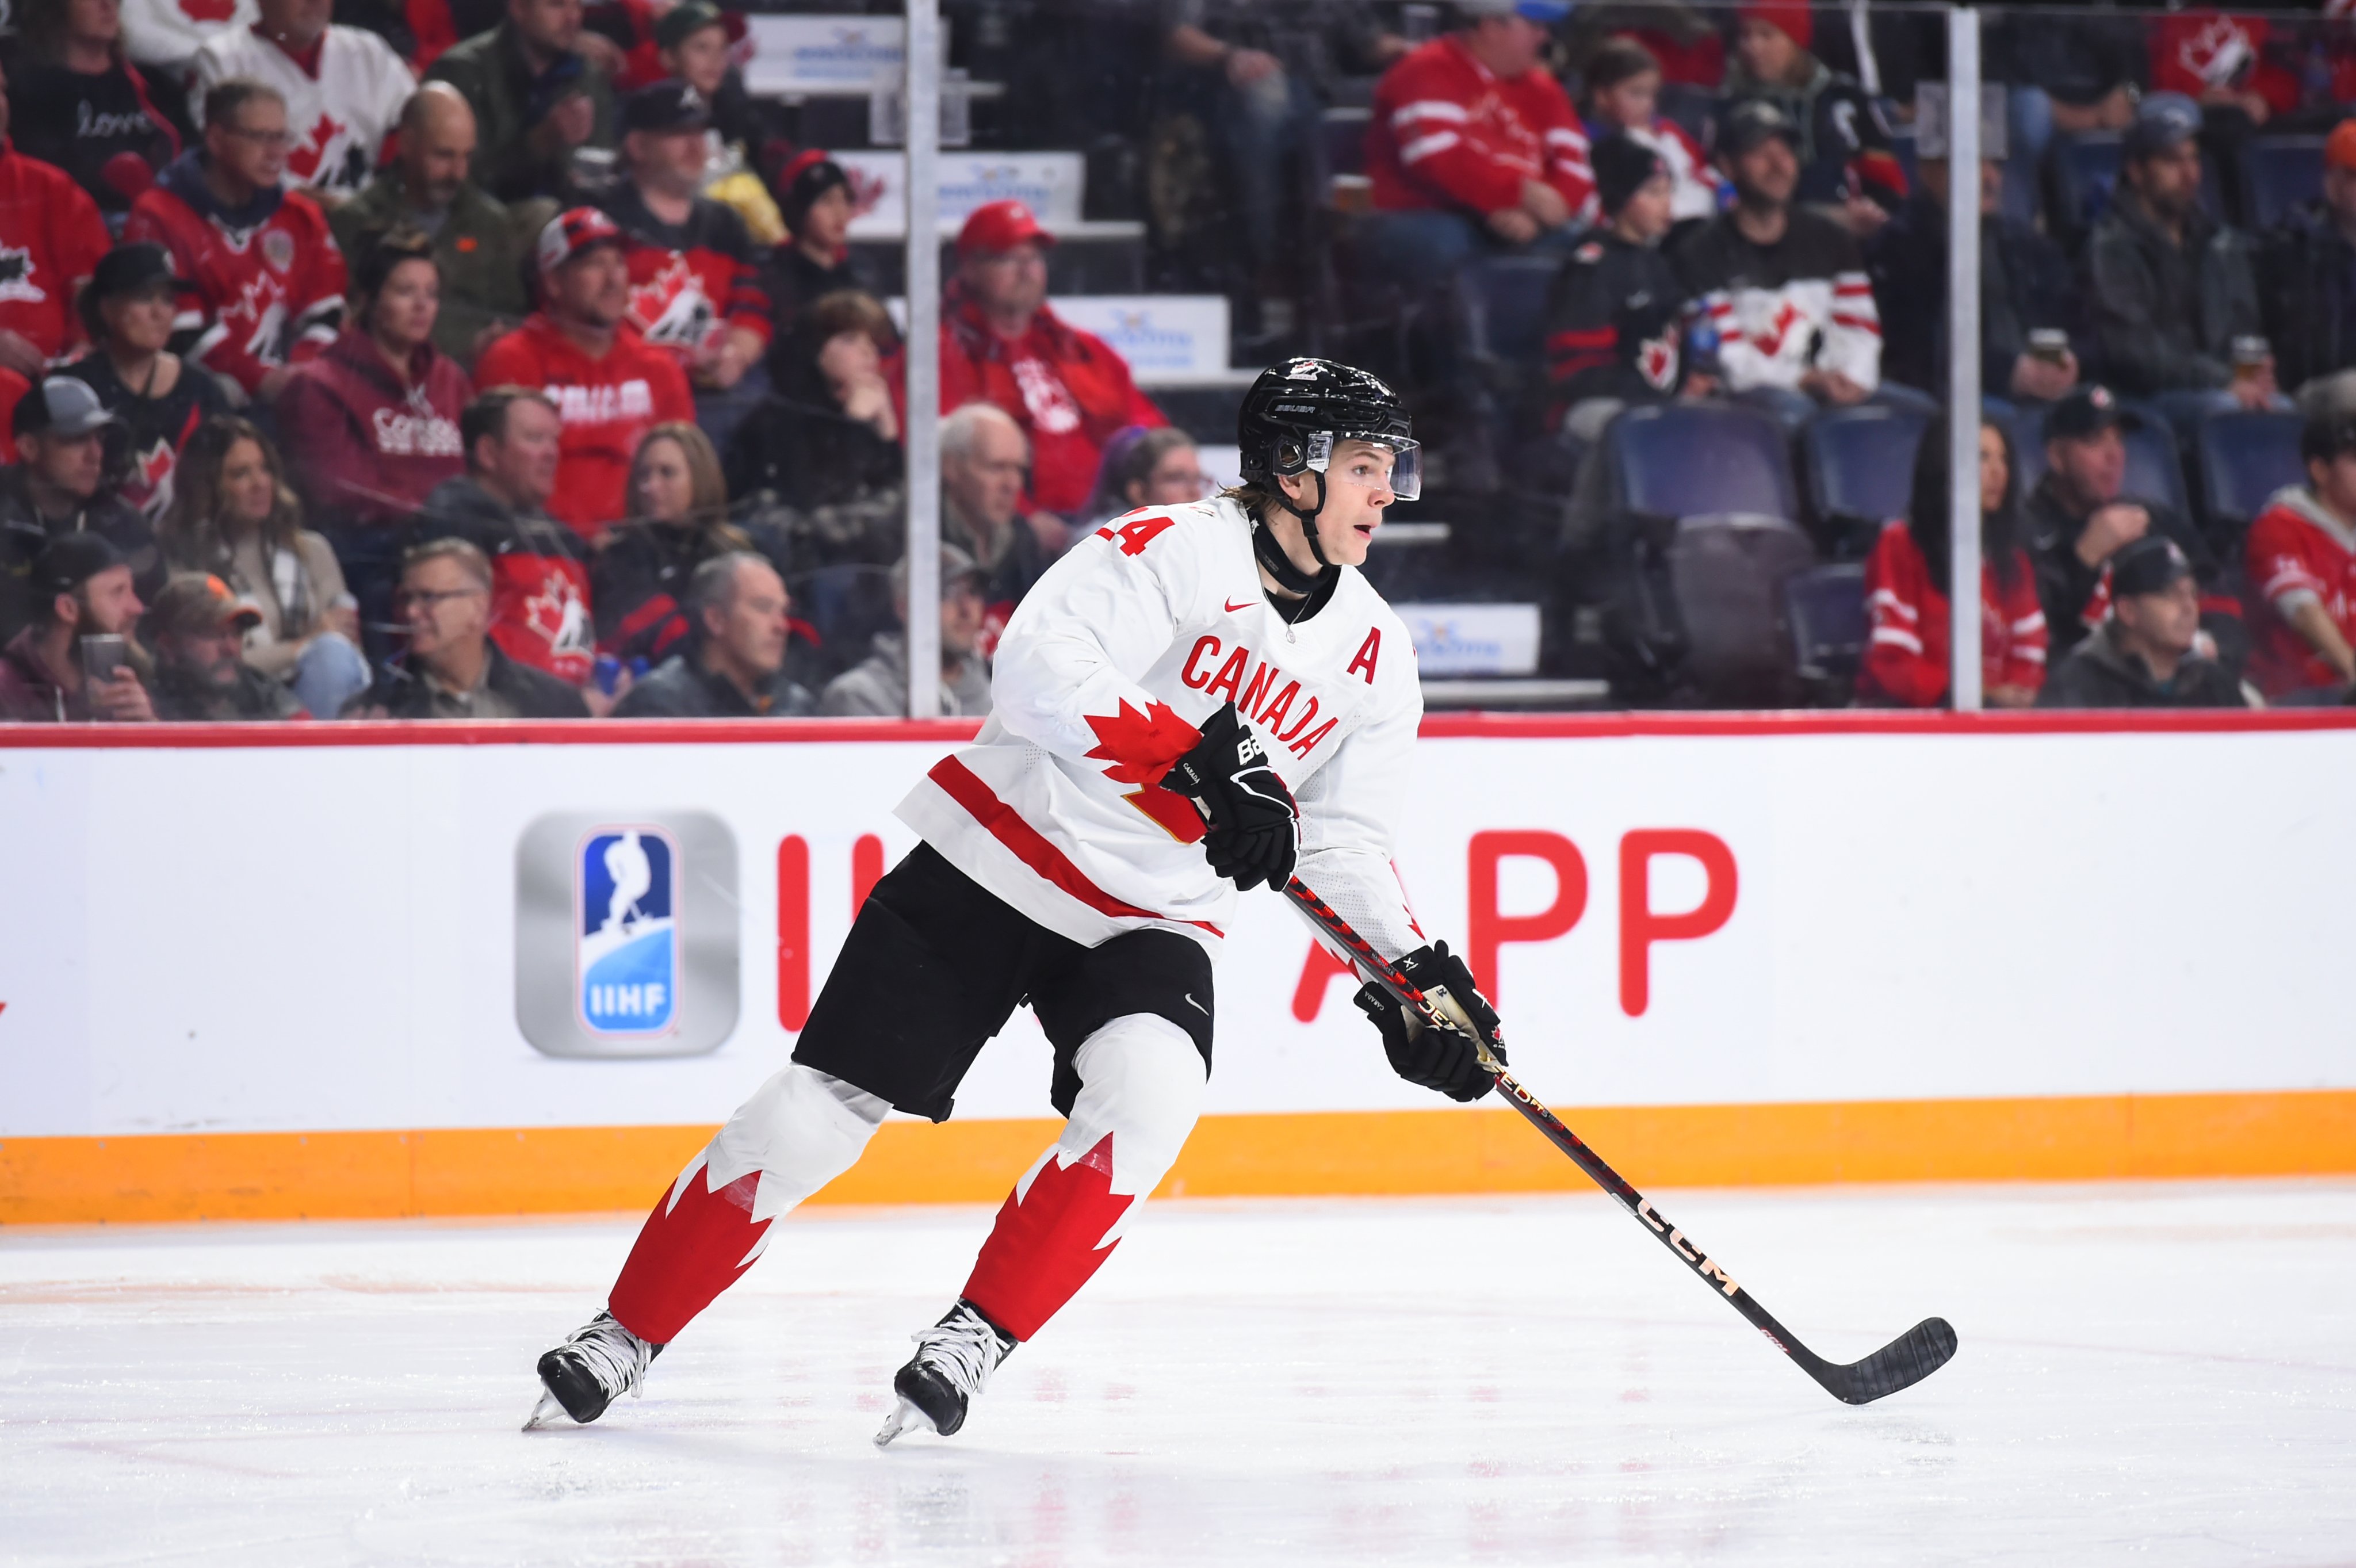 Hockey Canada on X: Meet Team 🇨🇦! 2️⃣2️⃣ players will wear